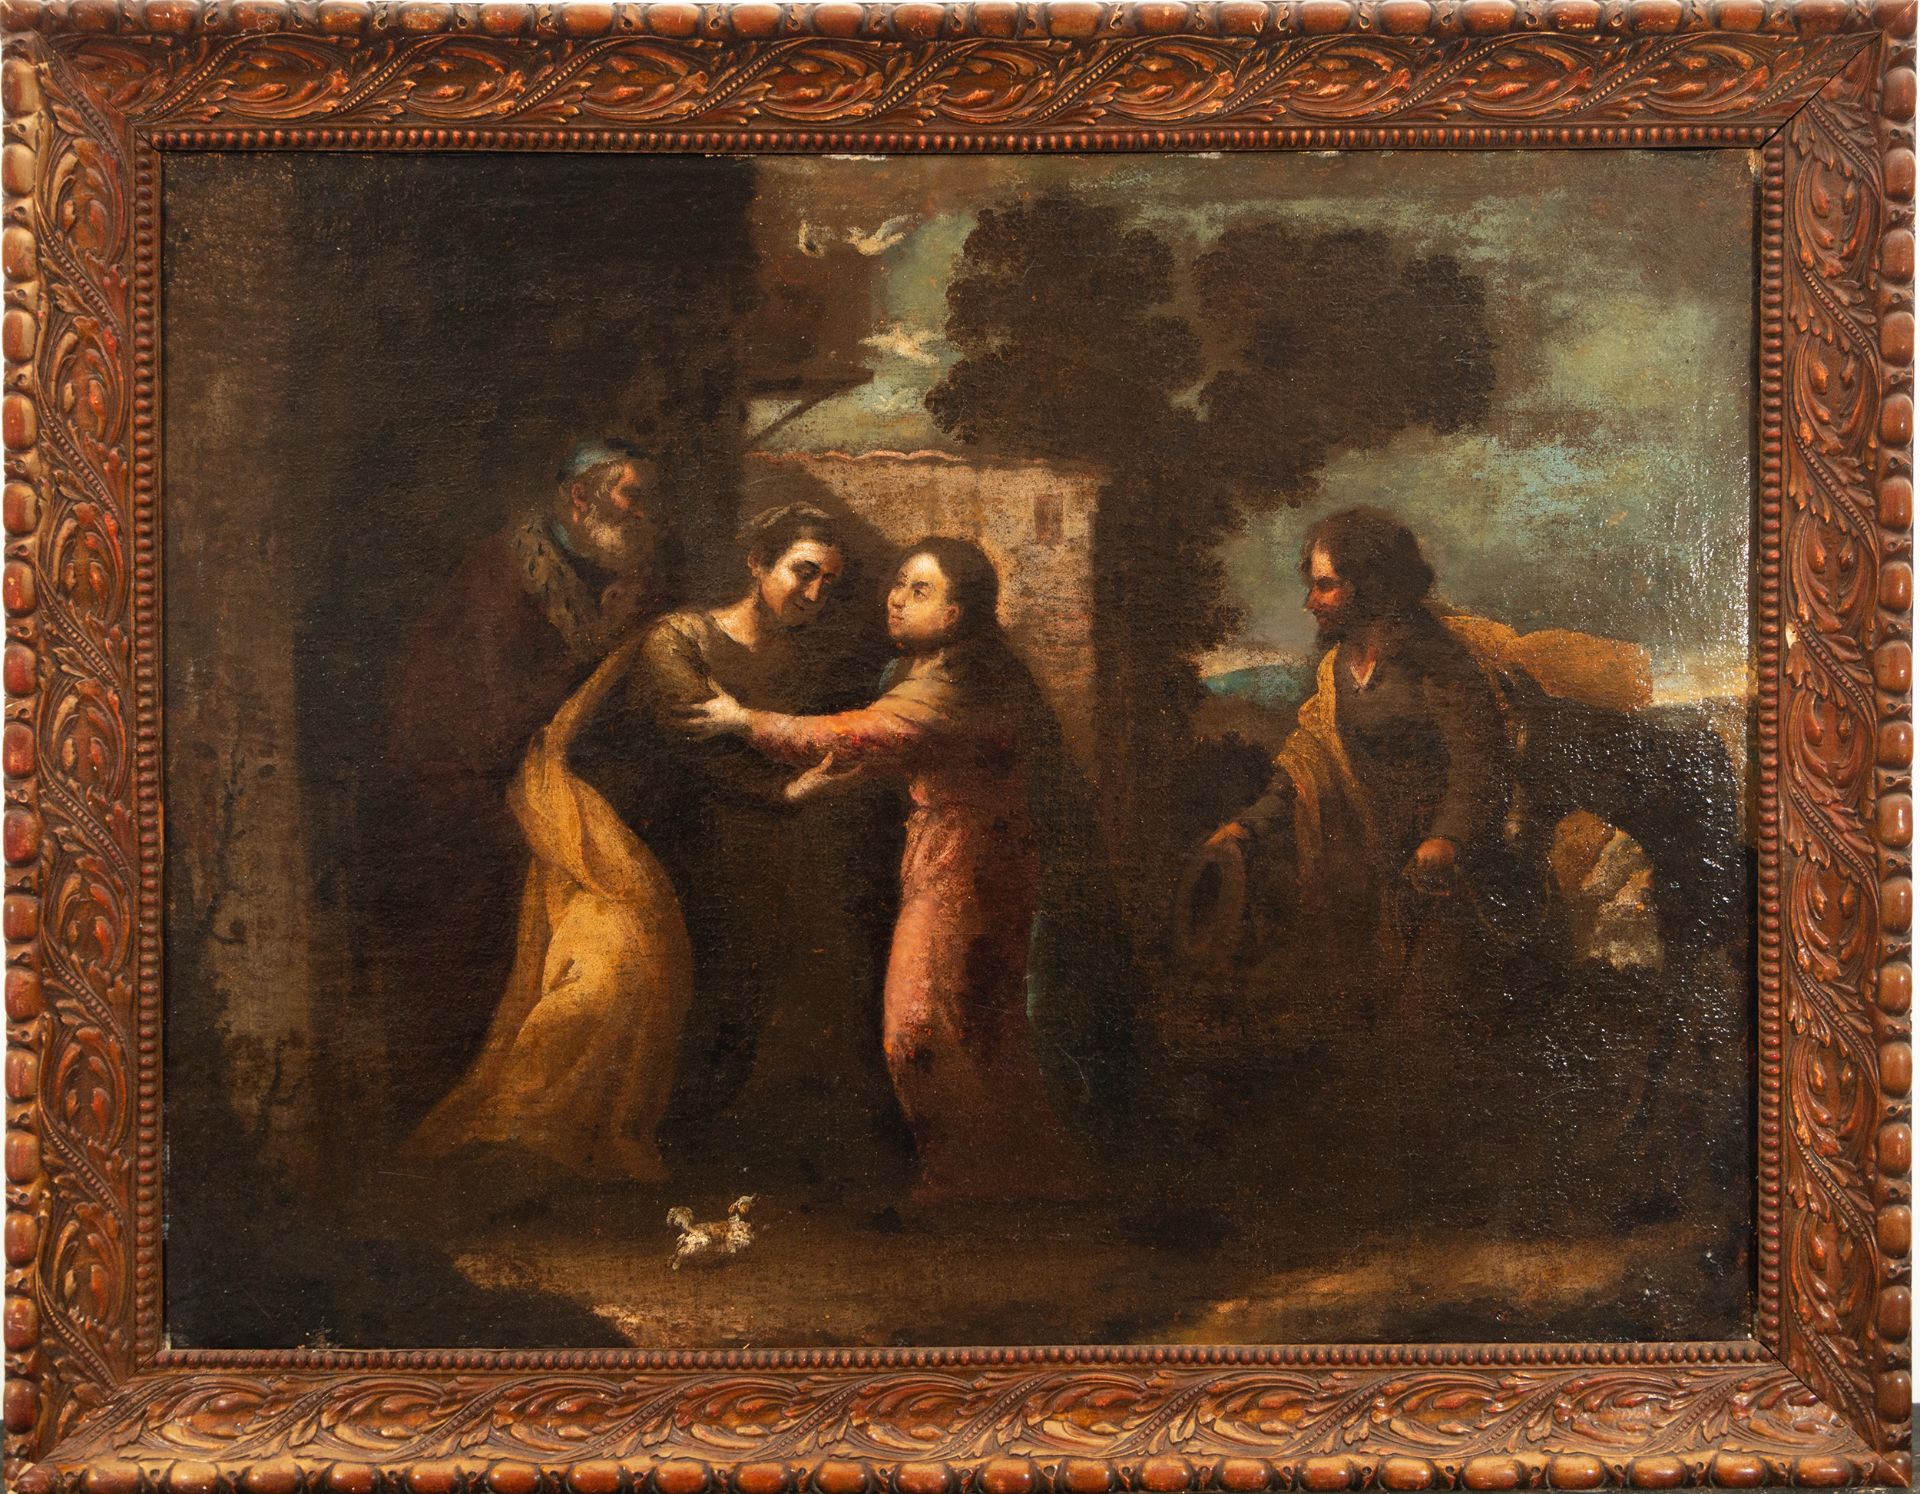 Saint Anne and Saint Joachim receiving the Virgin and Saint Joseph, 17th century Italian school